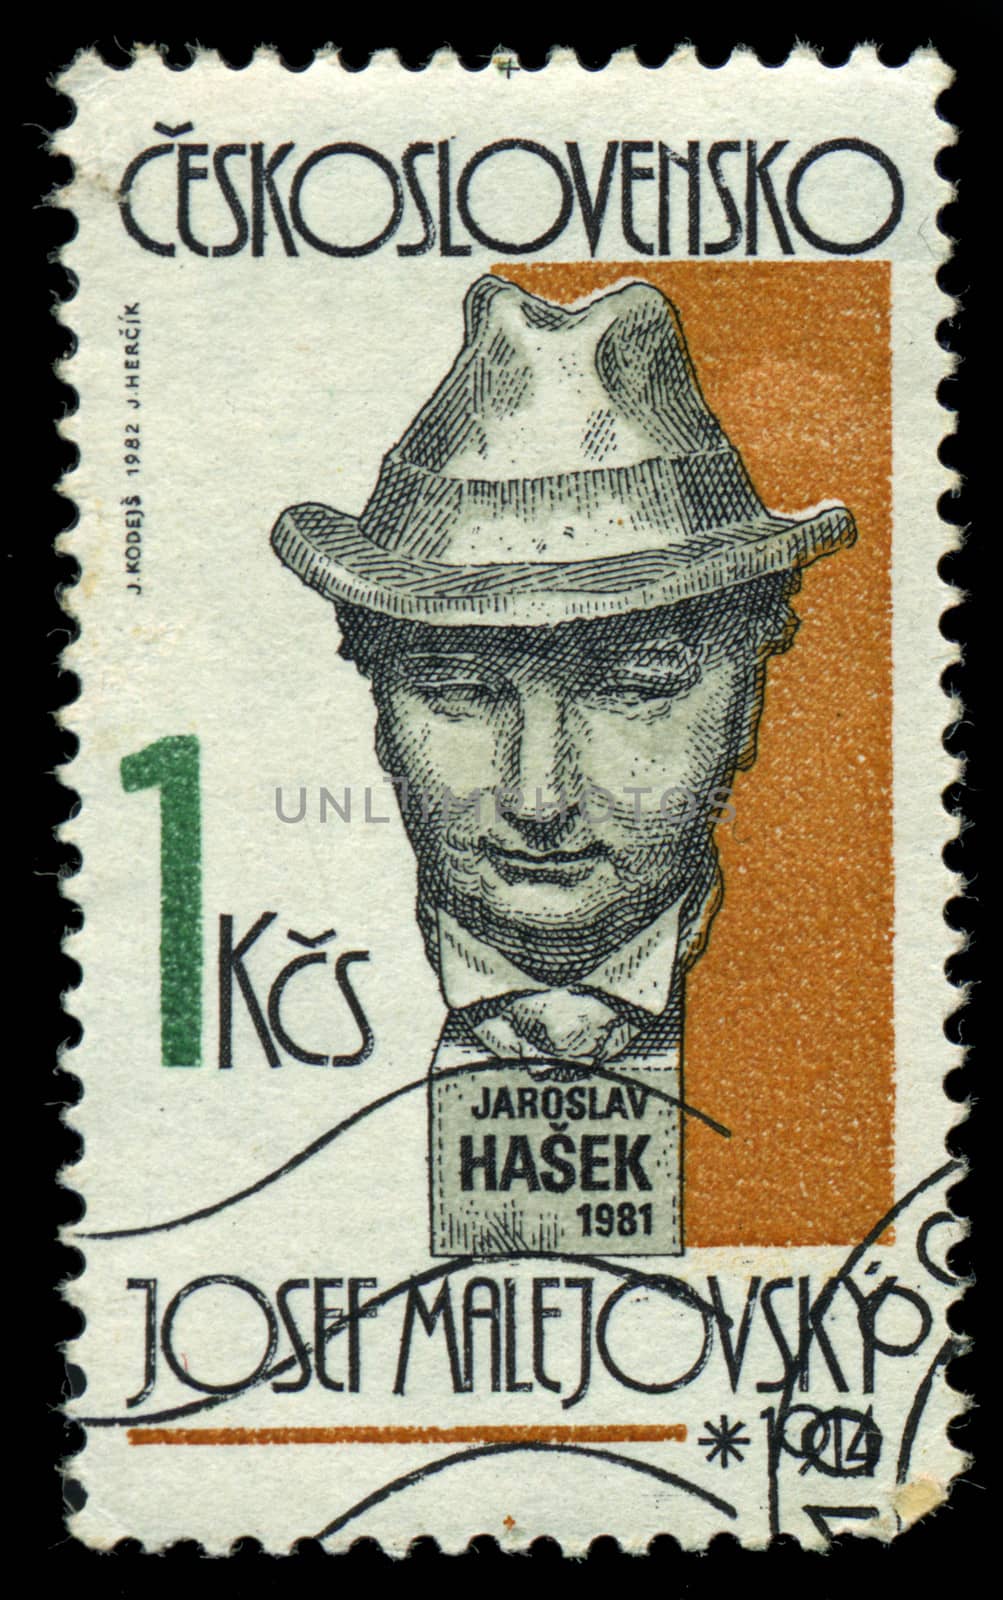 CZECHOSLOVAKIA - CIRCA 1982: A stamp printed in Czechoslovakia, shows sculpture portrait of Jaroslav Hasek by sculptor Josef Malejovsky, circa 1982 by Zhukow